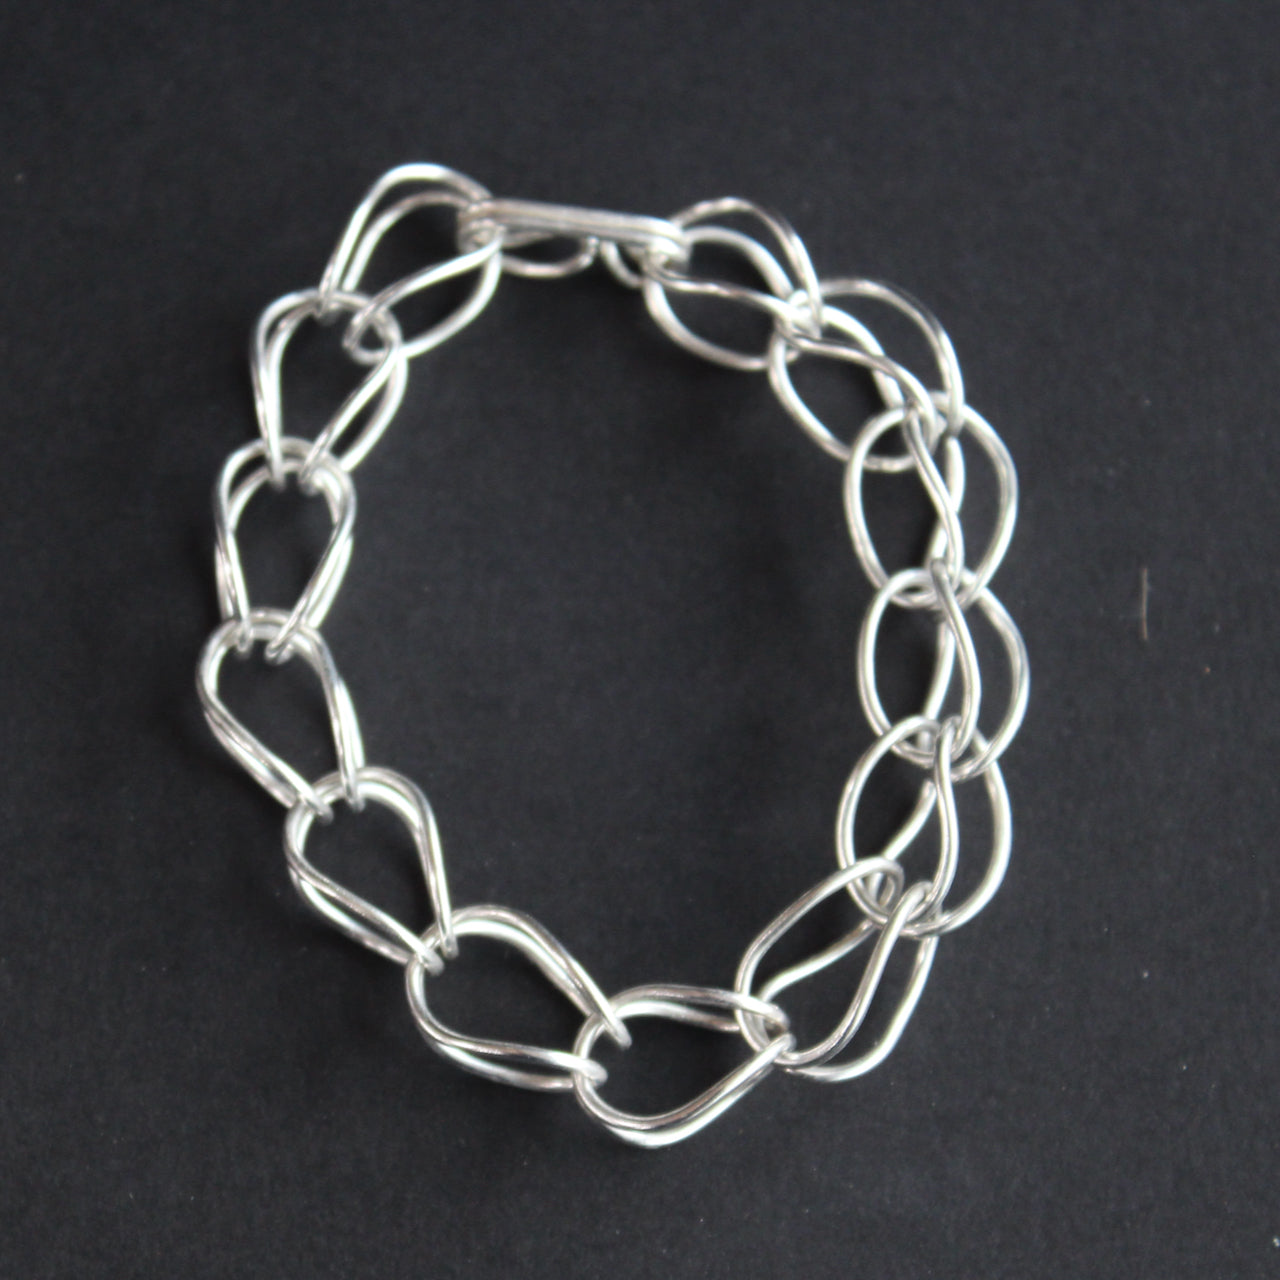 a silver chain bracelet  by Amy Stringer Uk jeweller.